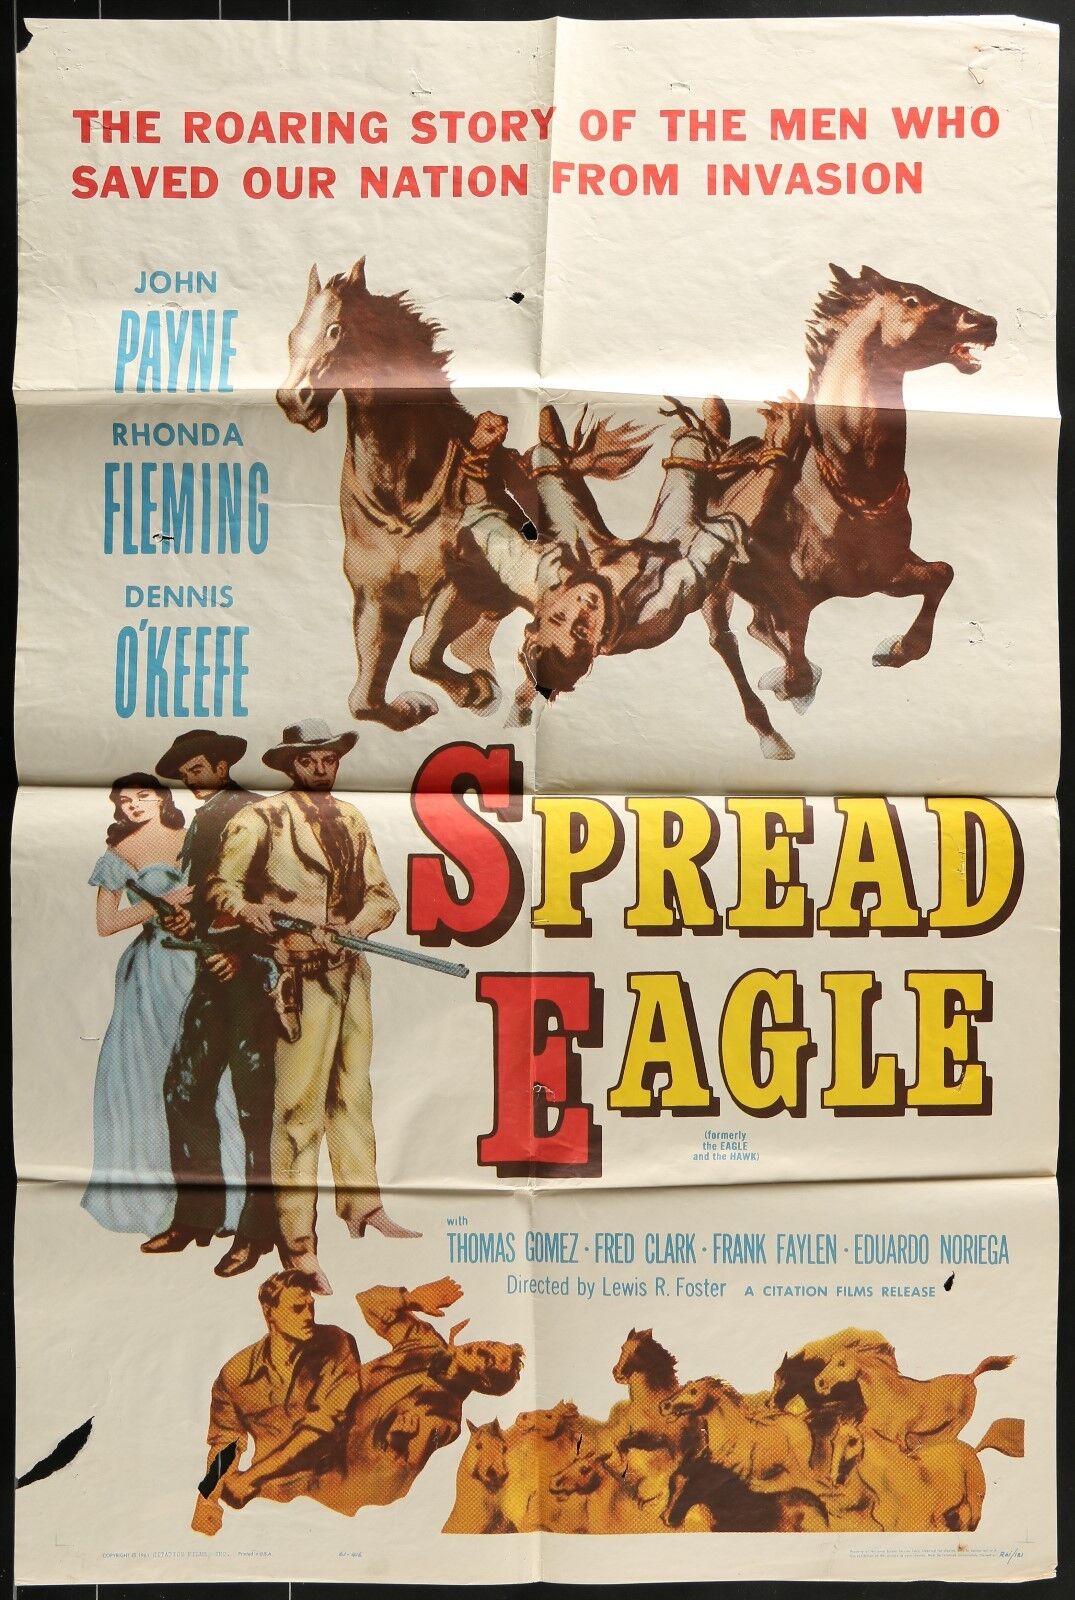 SPREAD EAGLE Rhonda Fleming Original R-1961 ONE SHEET MOVIE POSTER 27 x 41